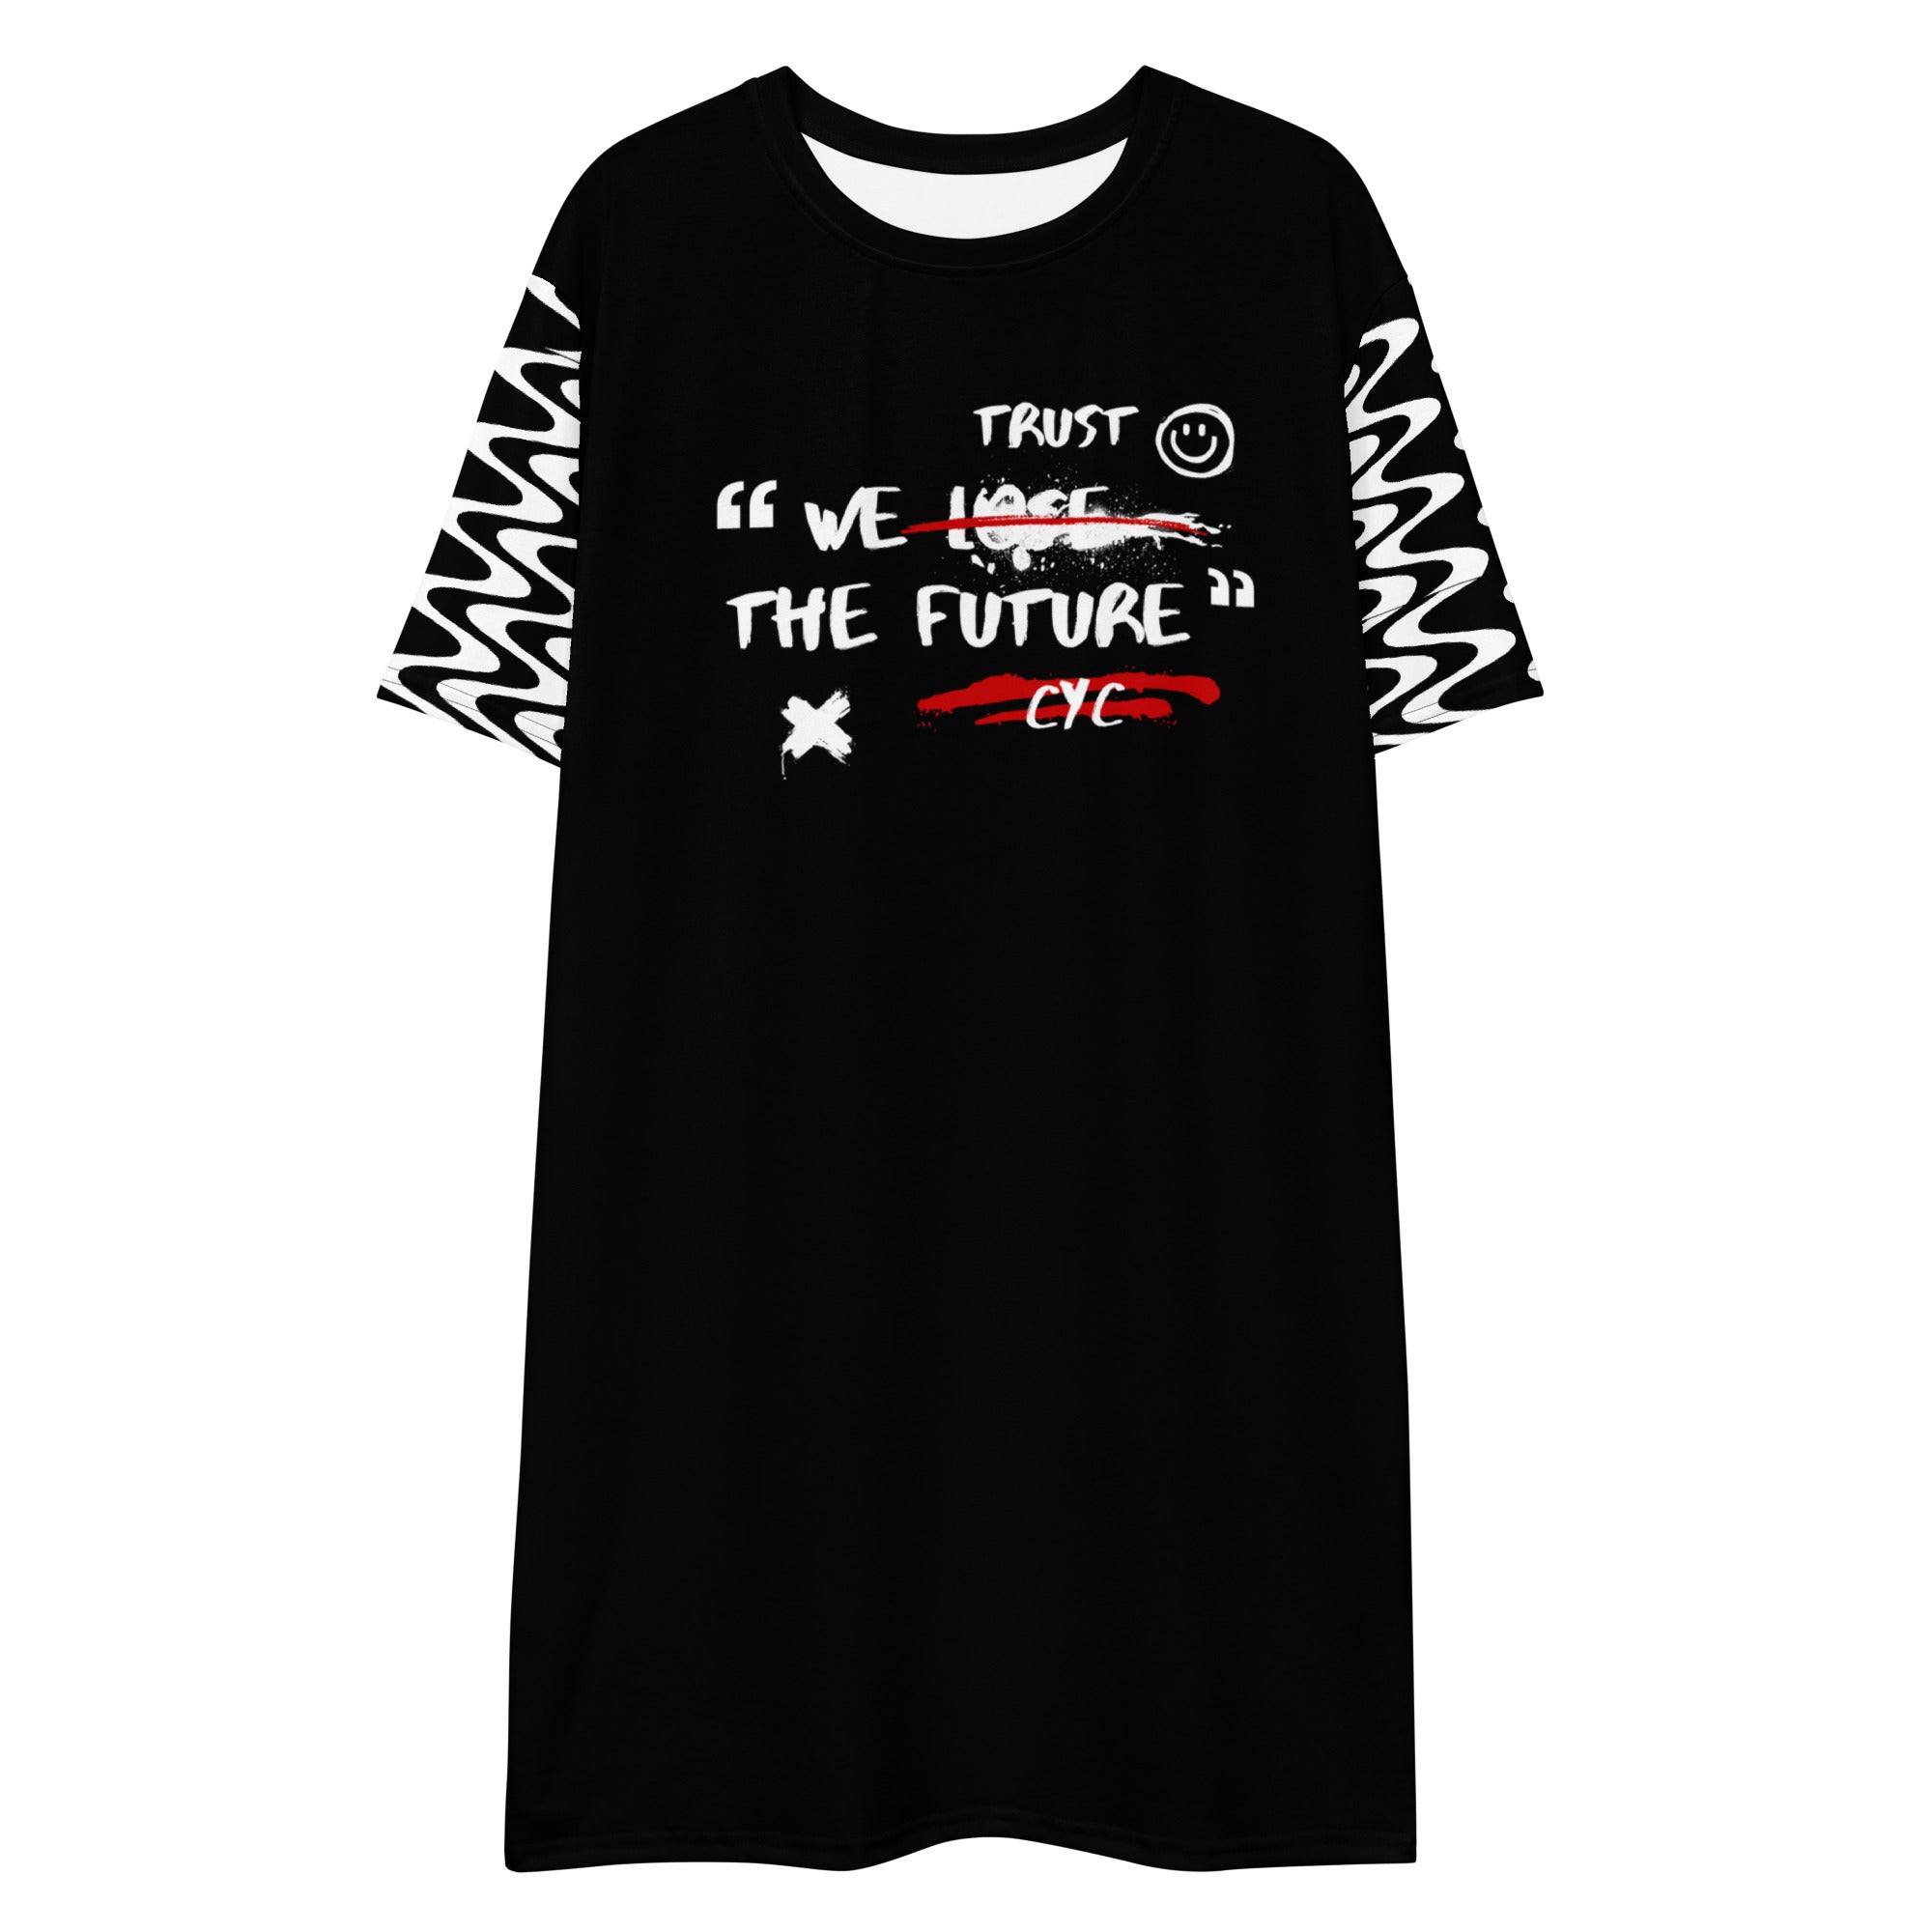 "The Future" T-shirt dress